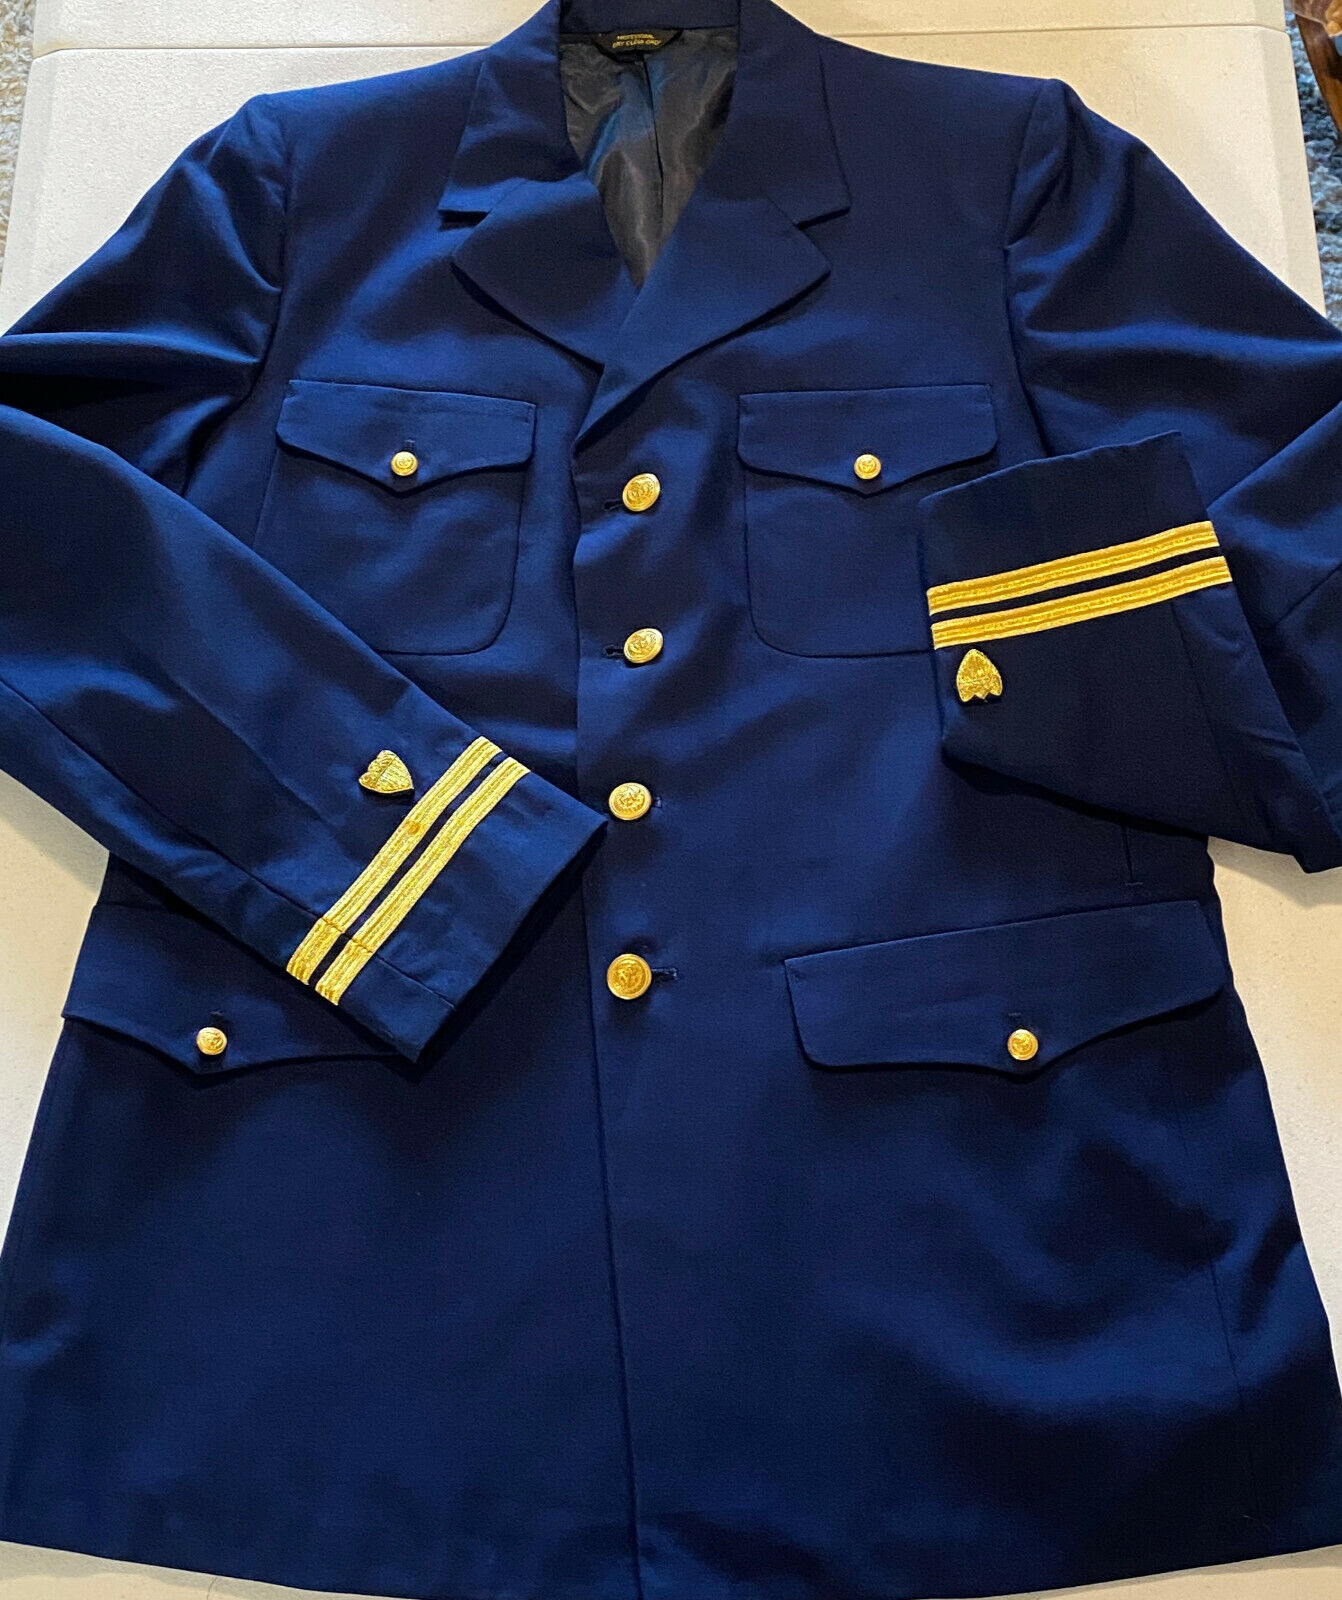 US Coast Guard Service Dress Blue Uniform Jacket Men's Size 45L Military Coat